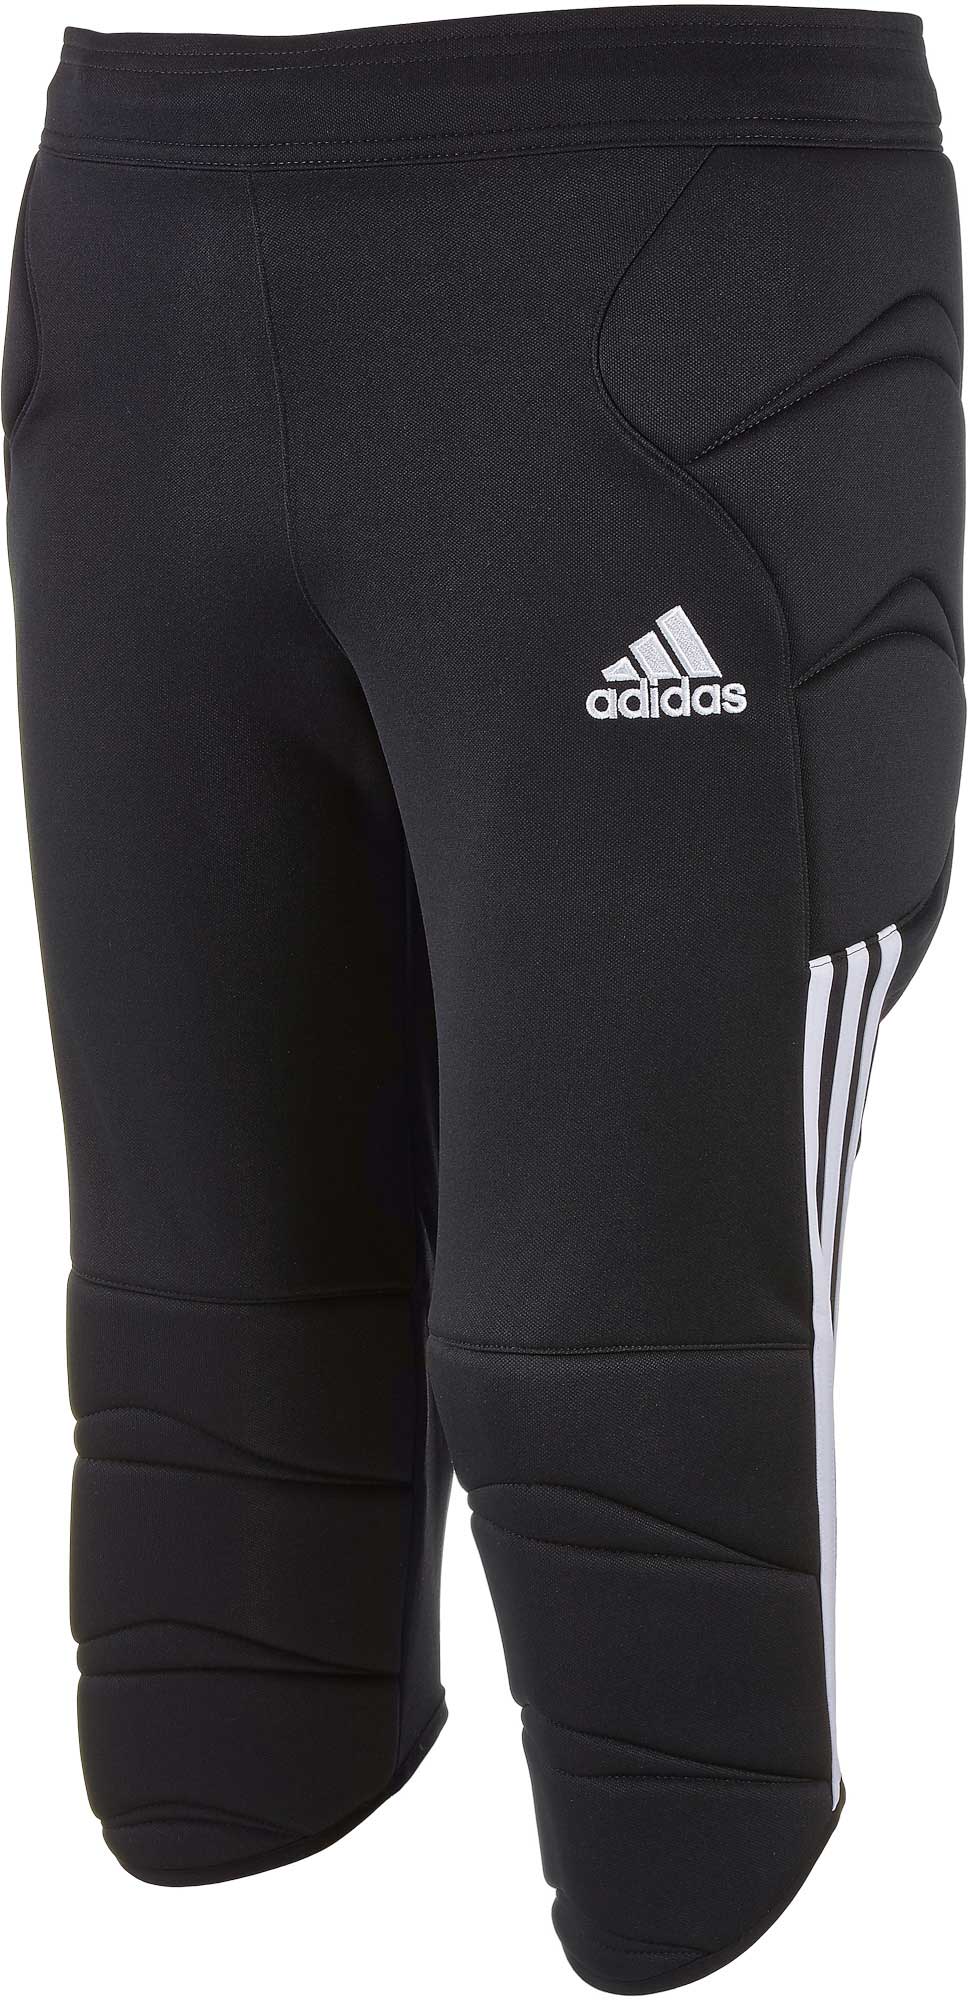 adidas goalkeeper trousers